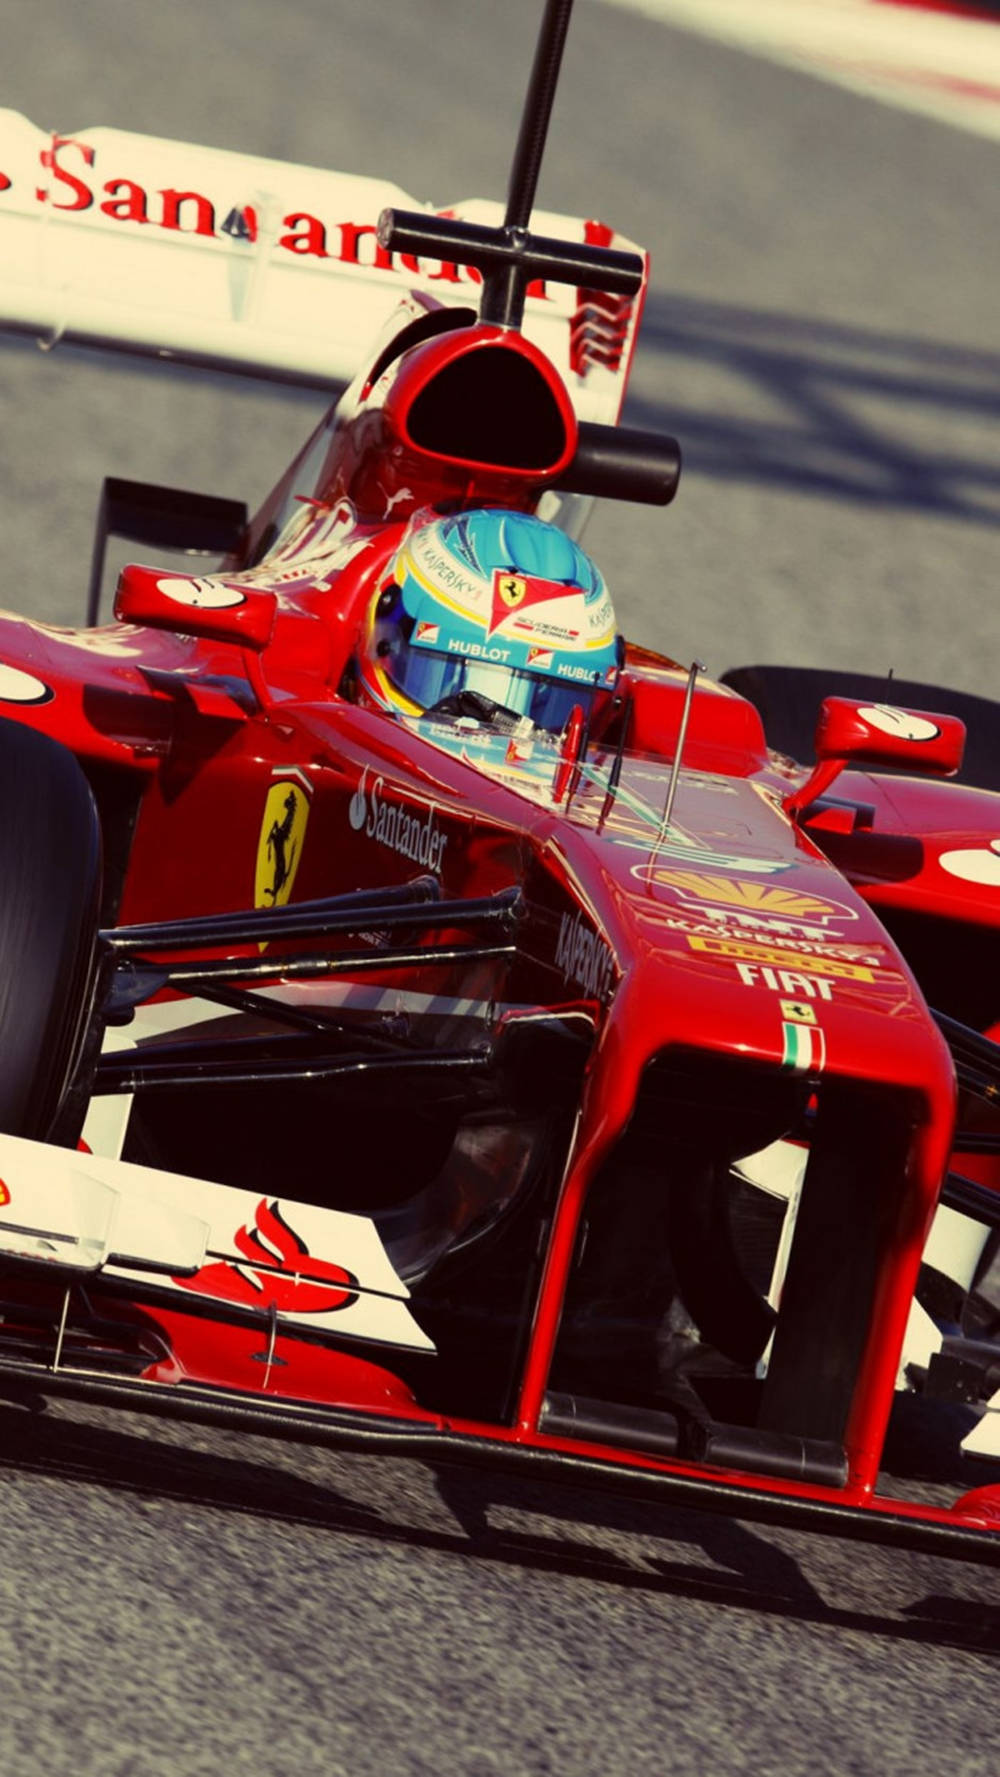 Red Racer Ferrari Iphone Background